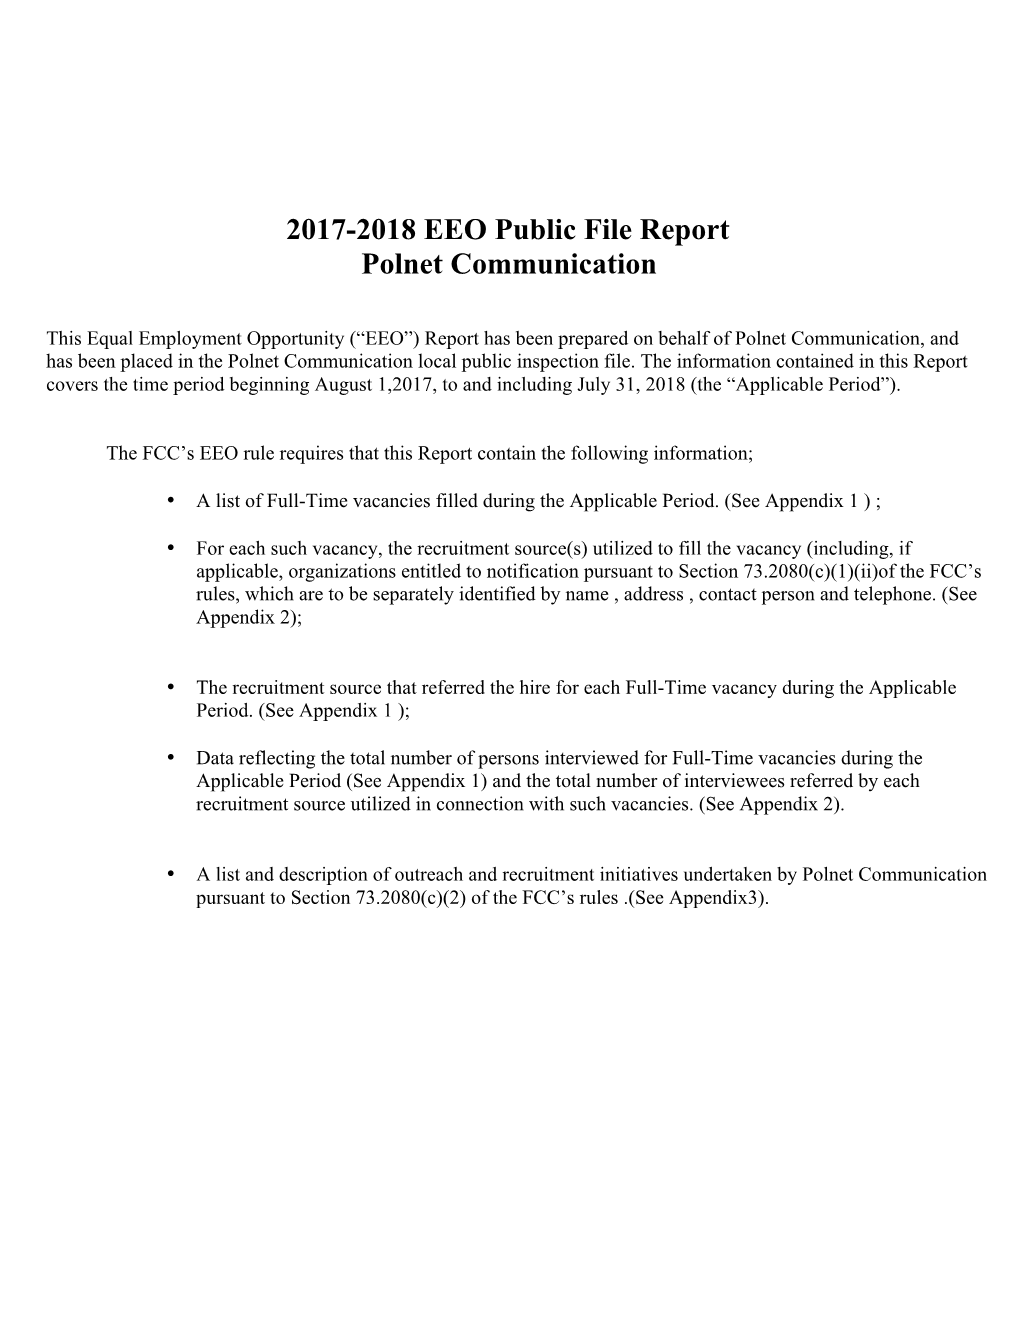 2017-2018 EEO Public File Report Polnet Communication